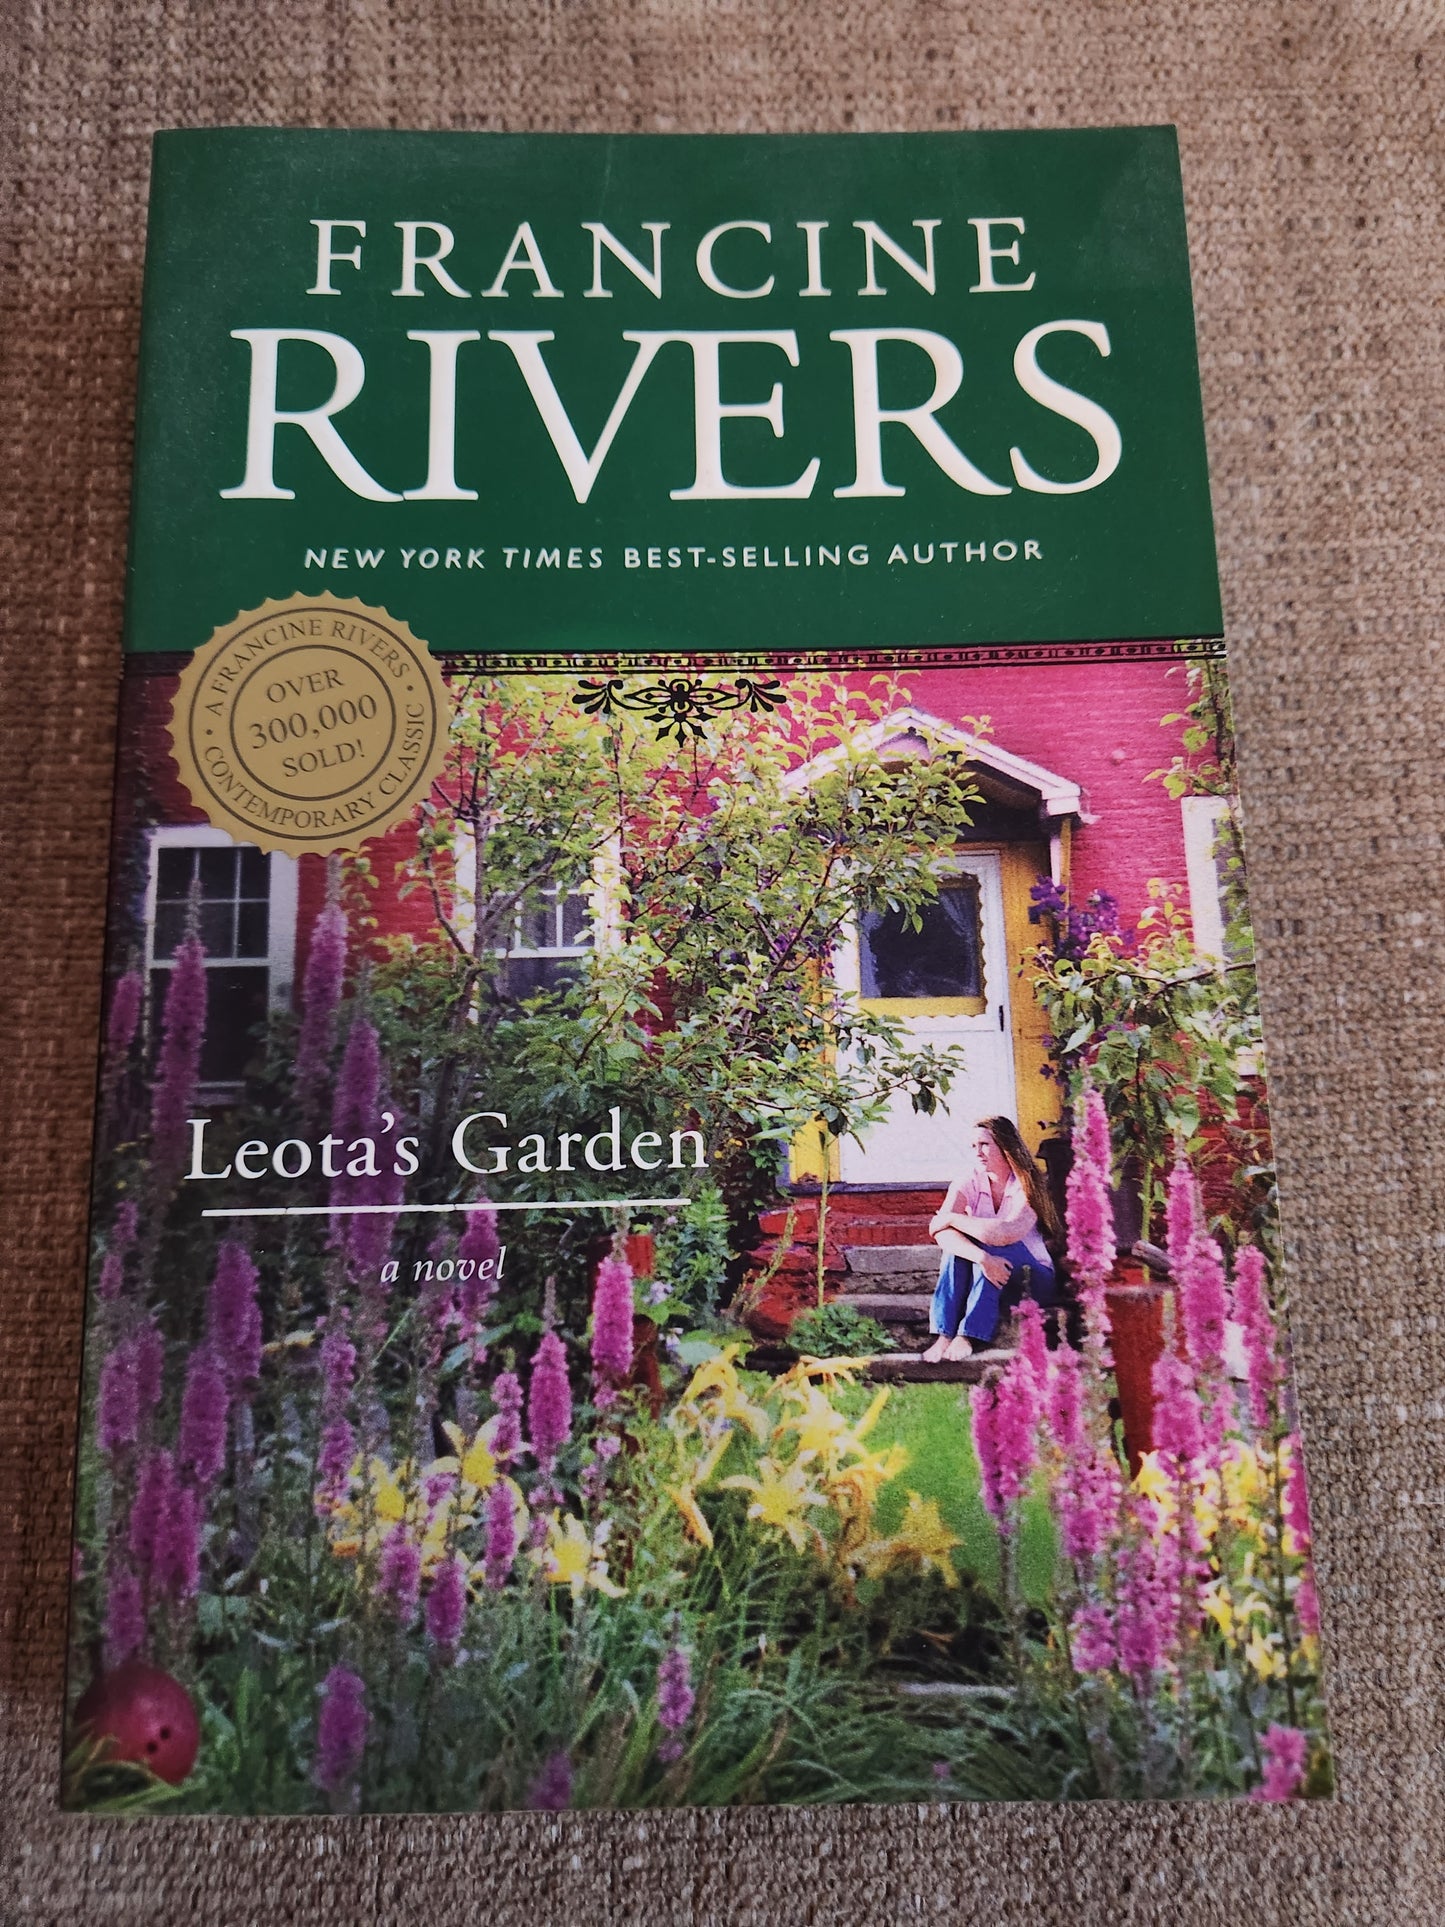 "Leota's Garden" by Francine Rivers